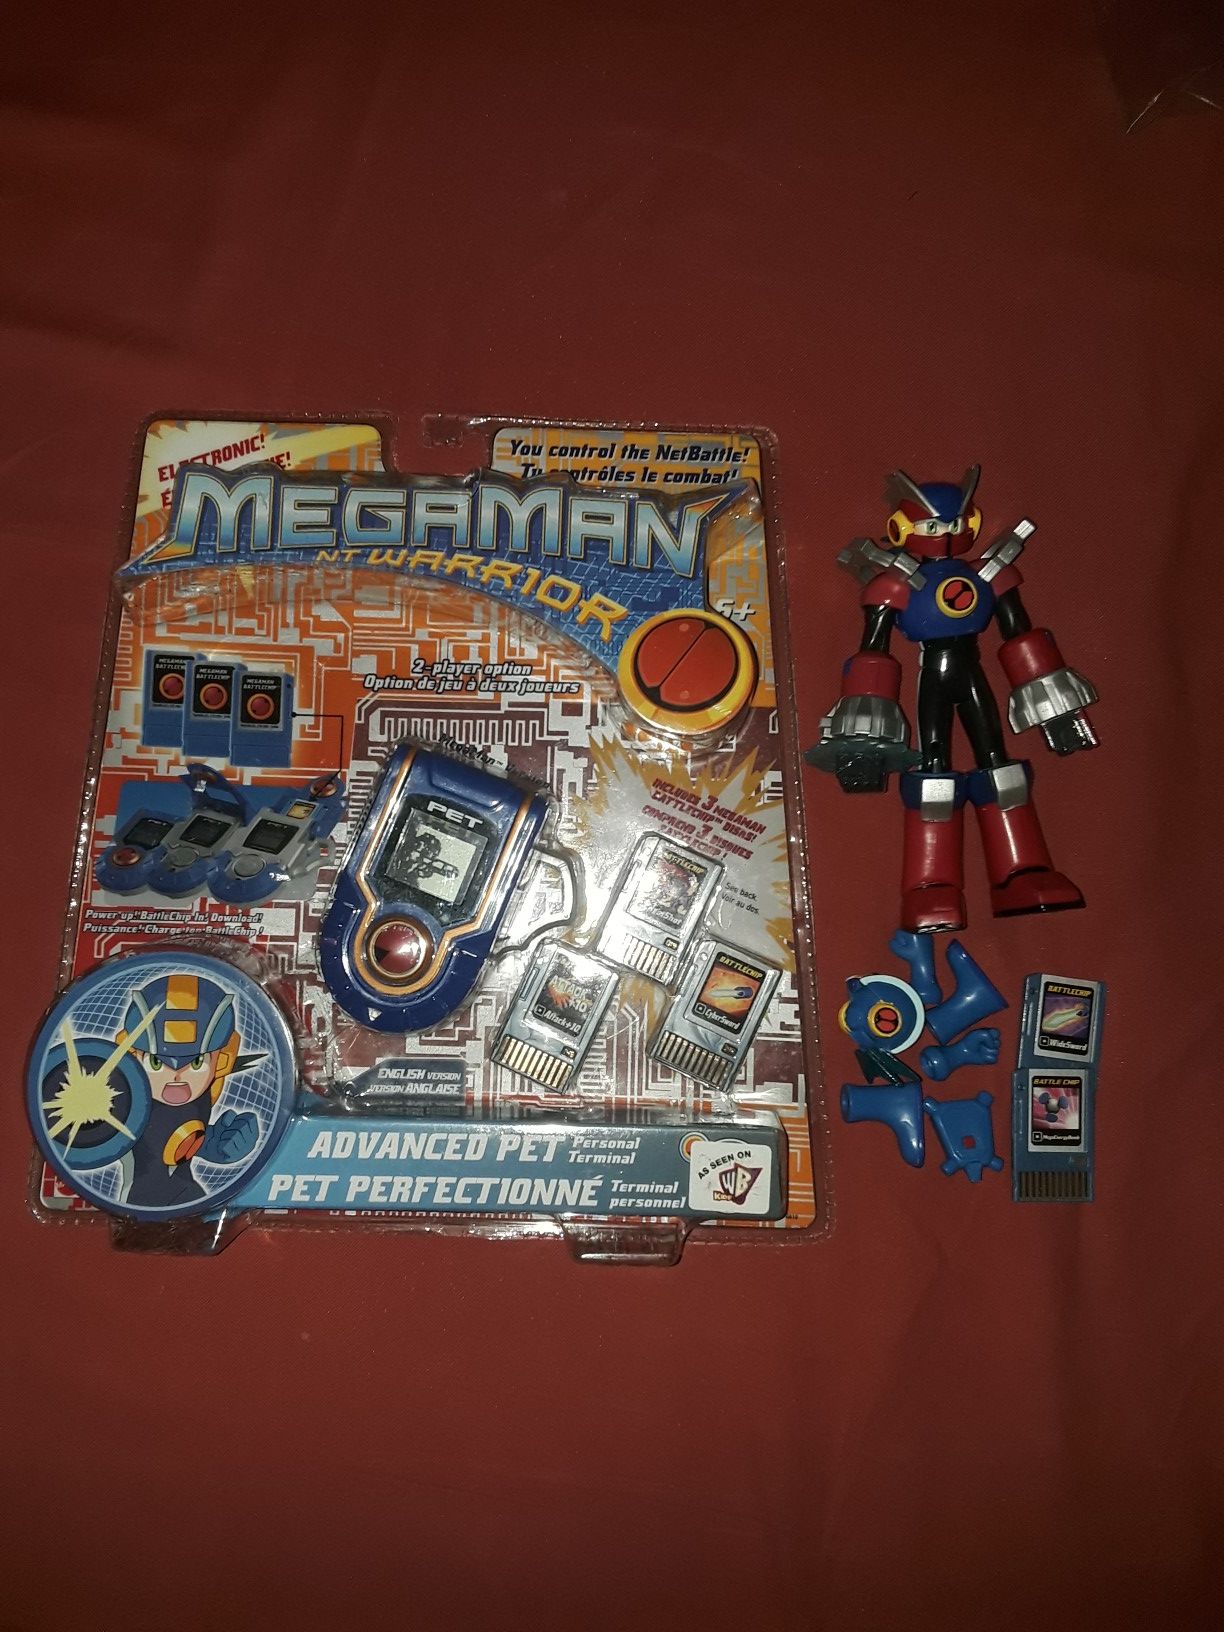 Megaman Nt warrior advanced pet and armor swap figure